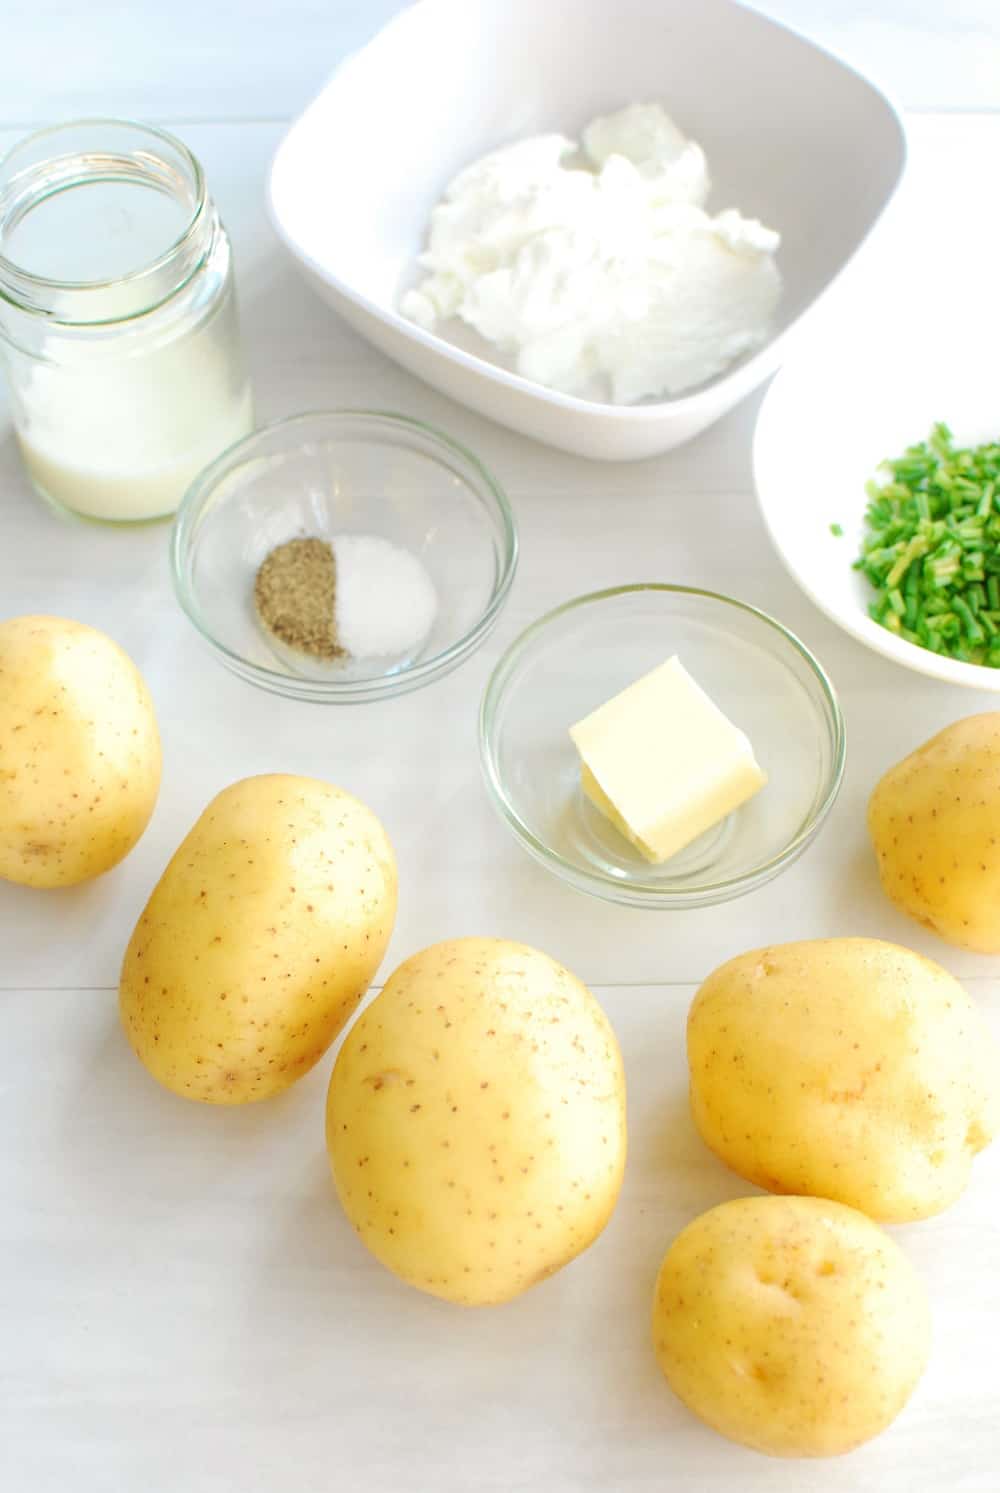 Potatoes, butter, salt, pepper, greek yogurt, milk, and chives - all ingredients